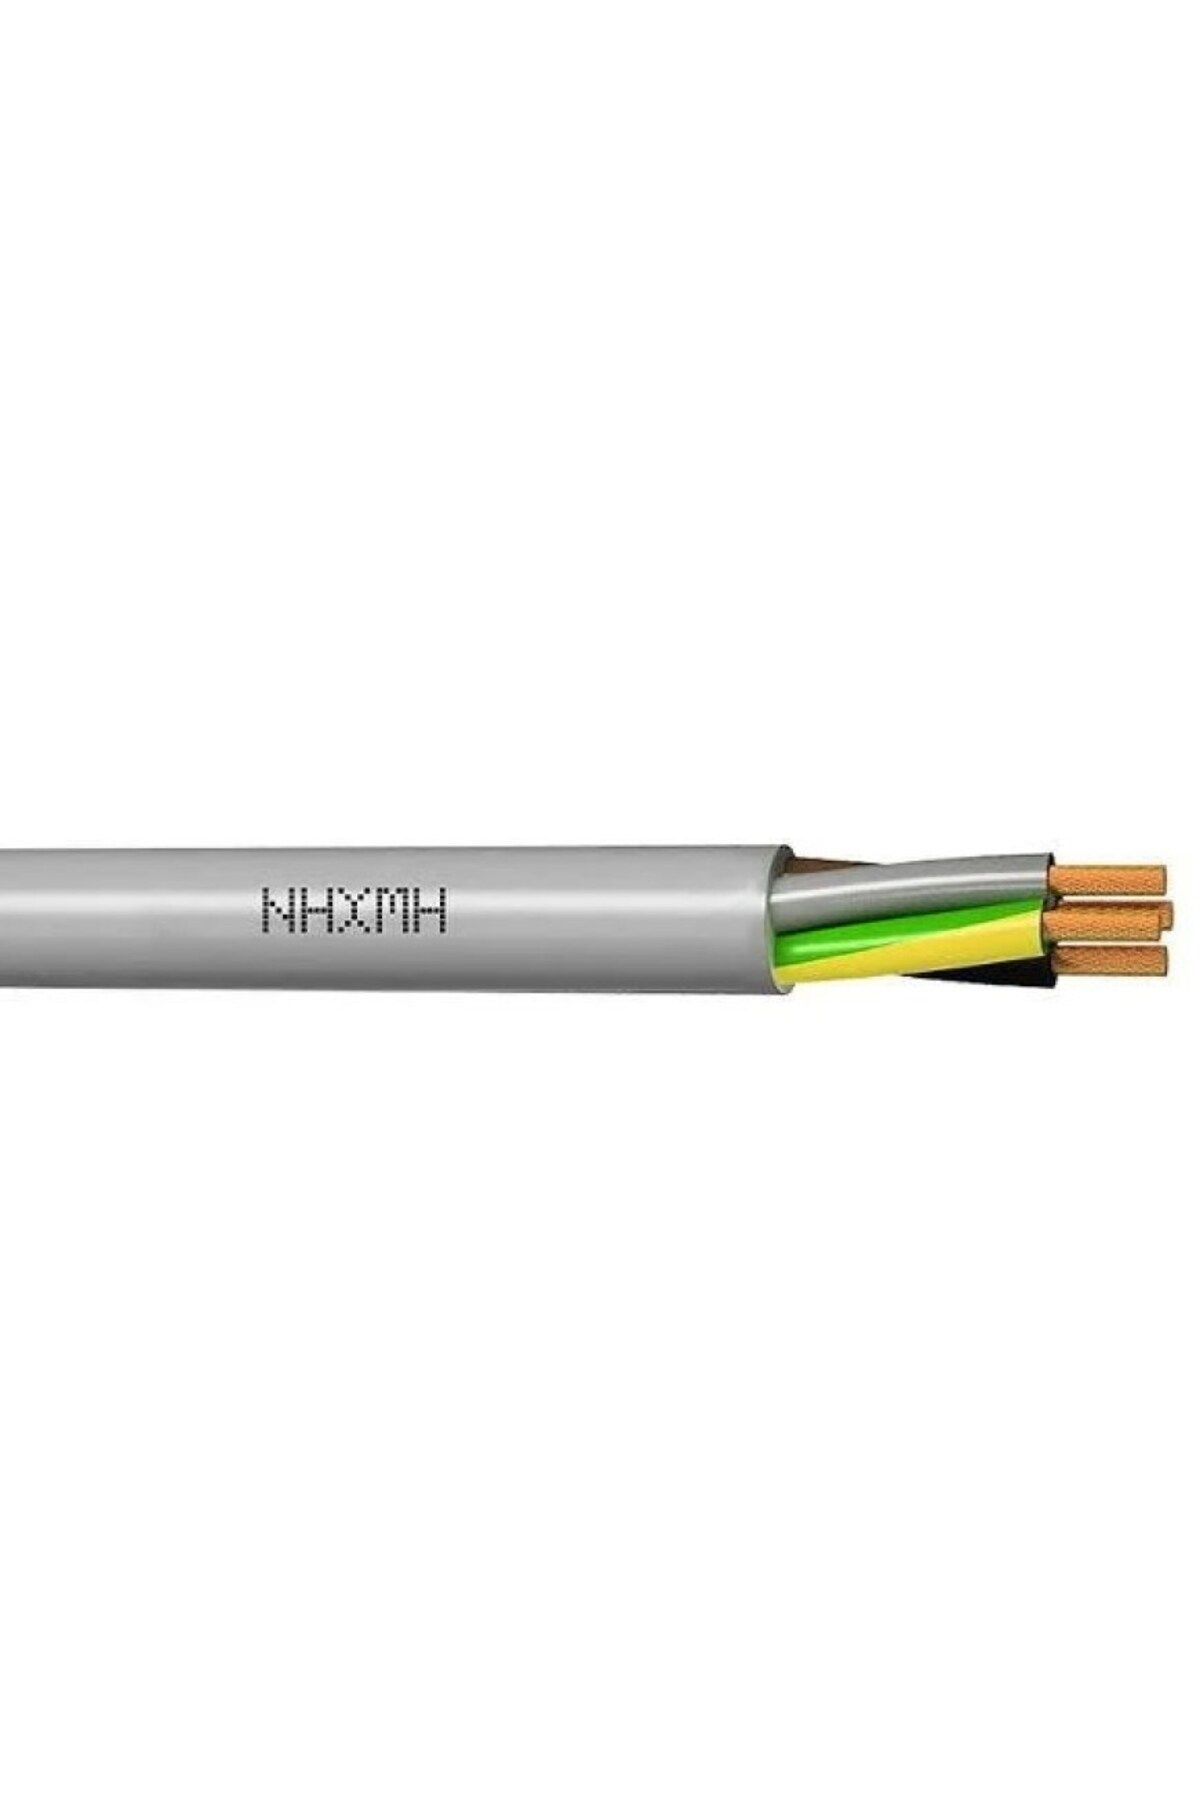 ÖZNUR 10 Metre 5x2.5 NHXMH Halogen Free Kablo Öznur Kablo